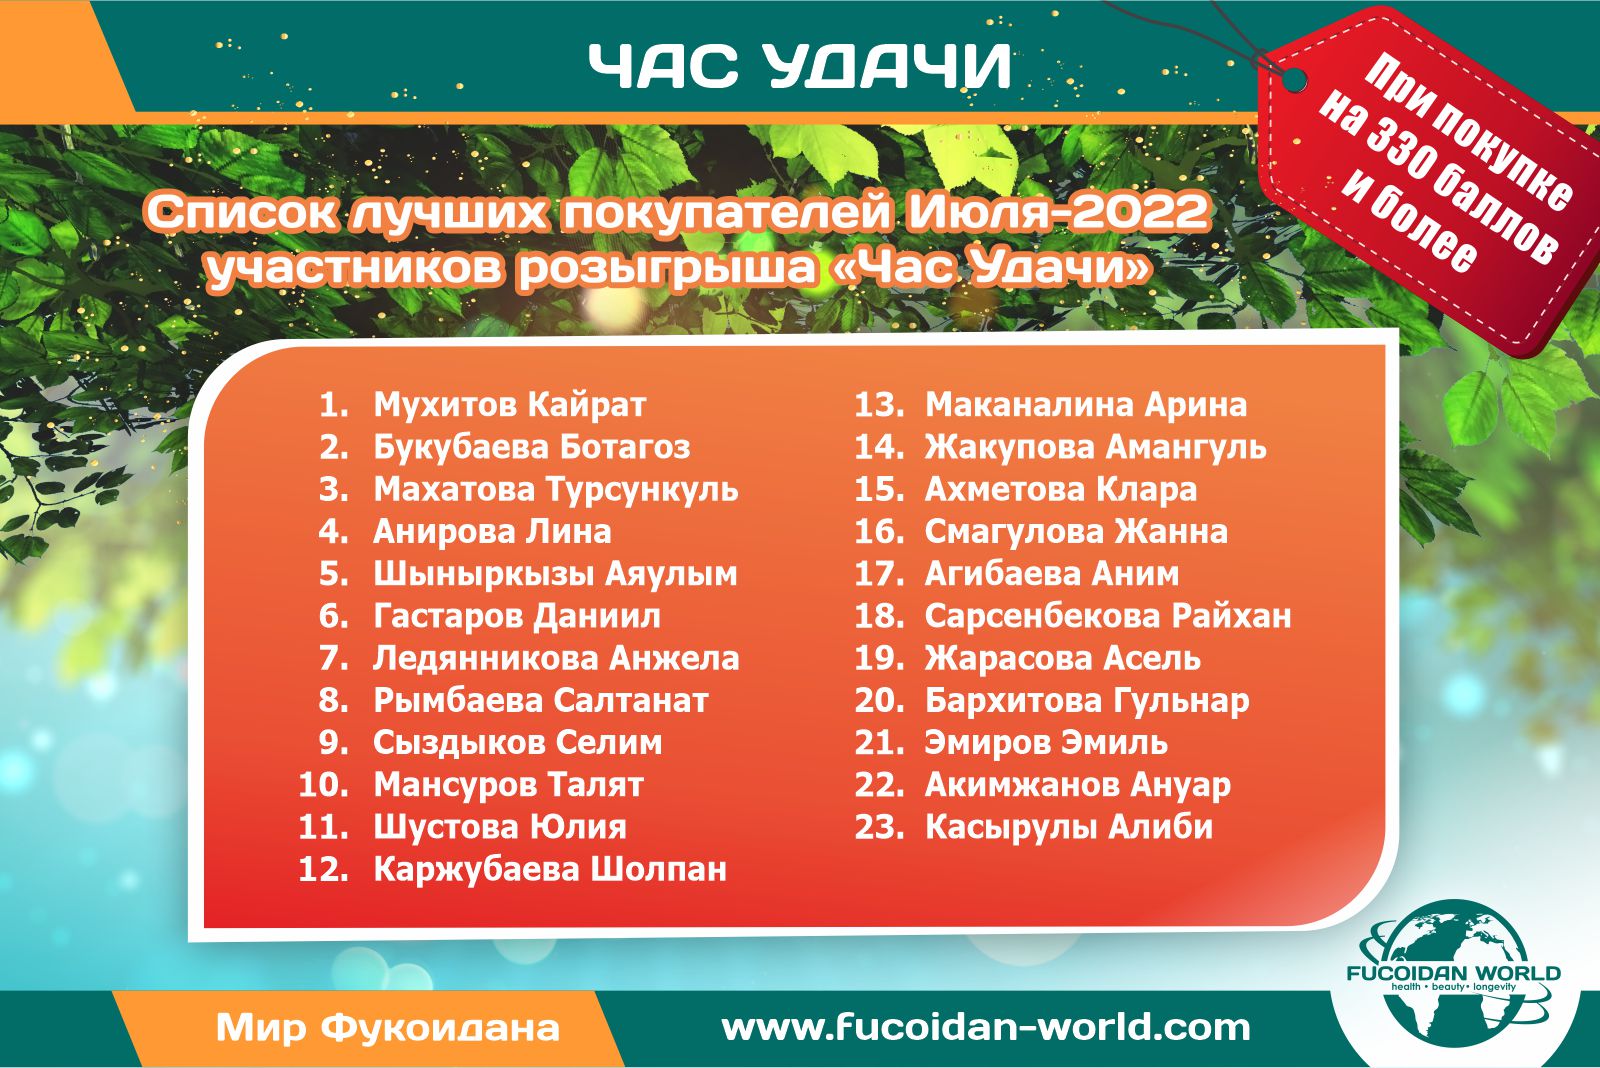 Списки участников «Часа Удачи» компании «Fucoidan World» за Июль-2022